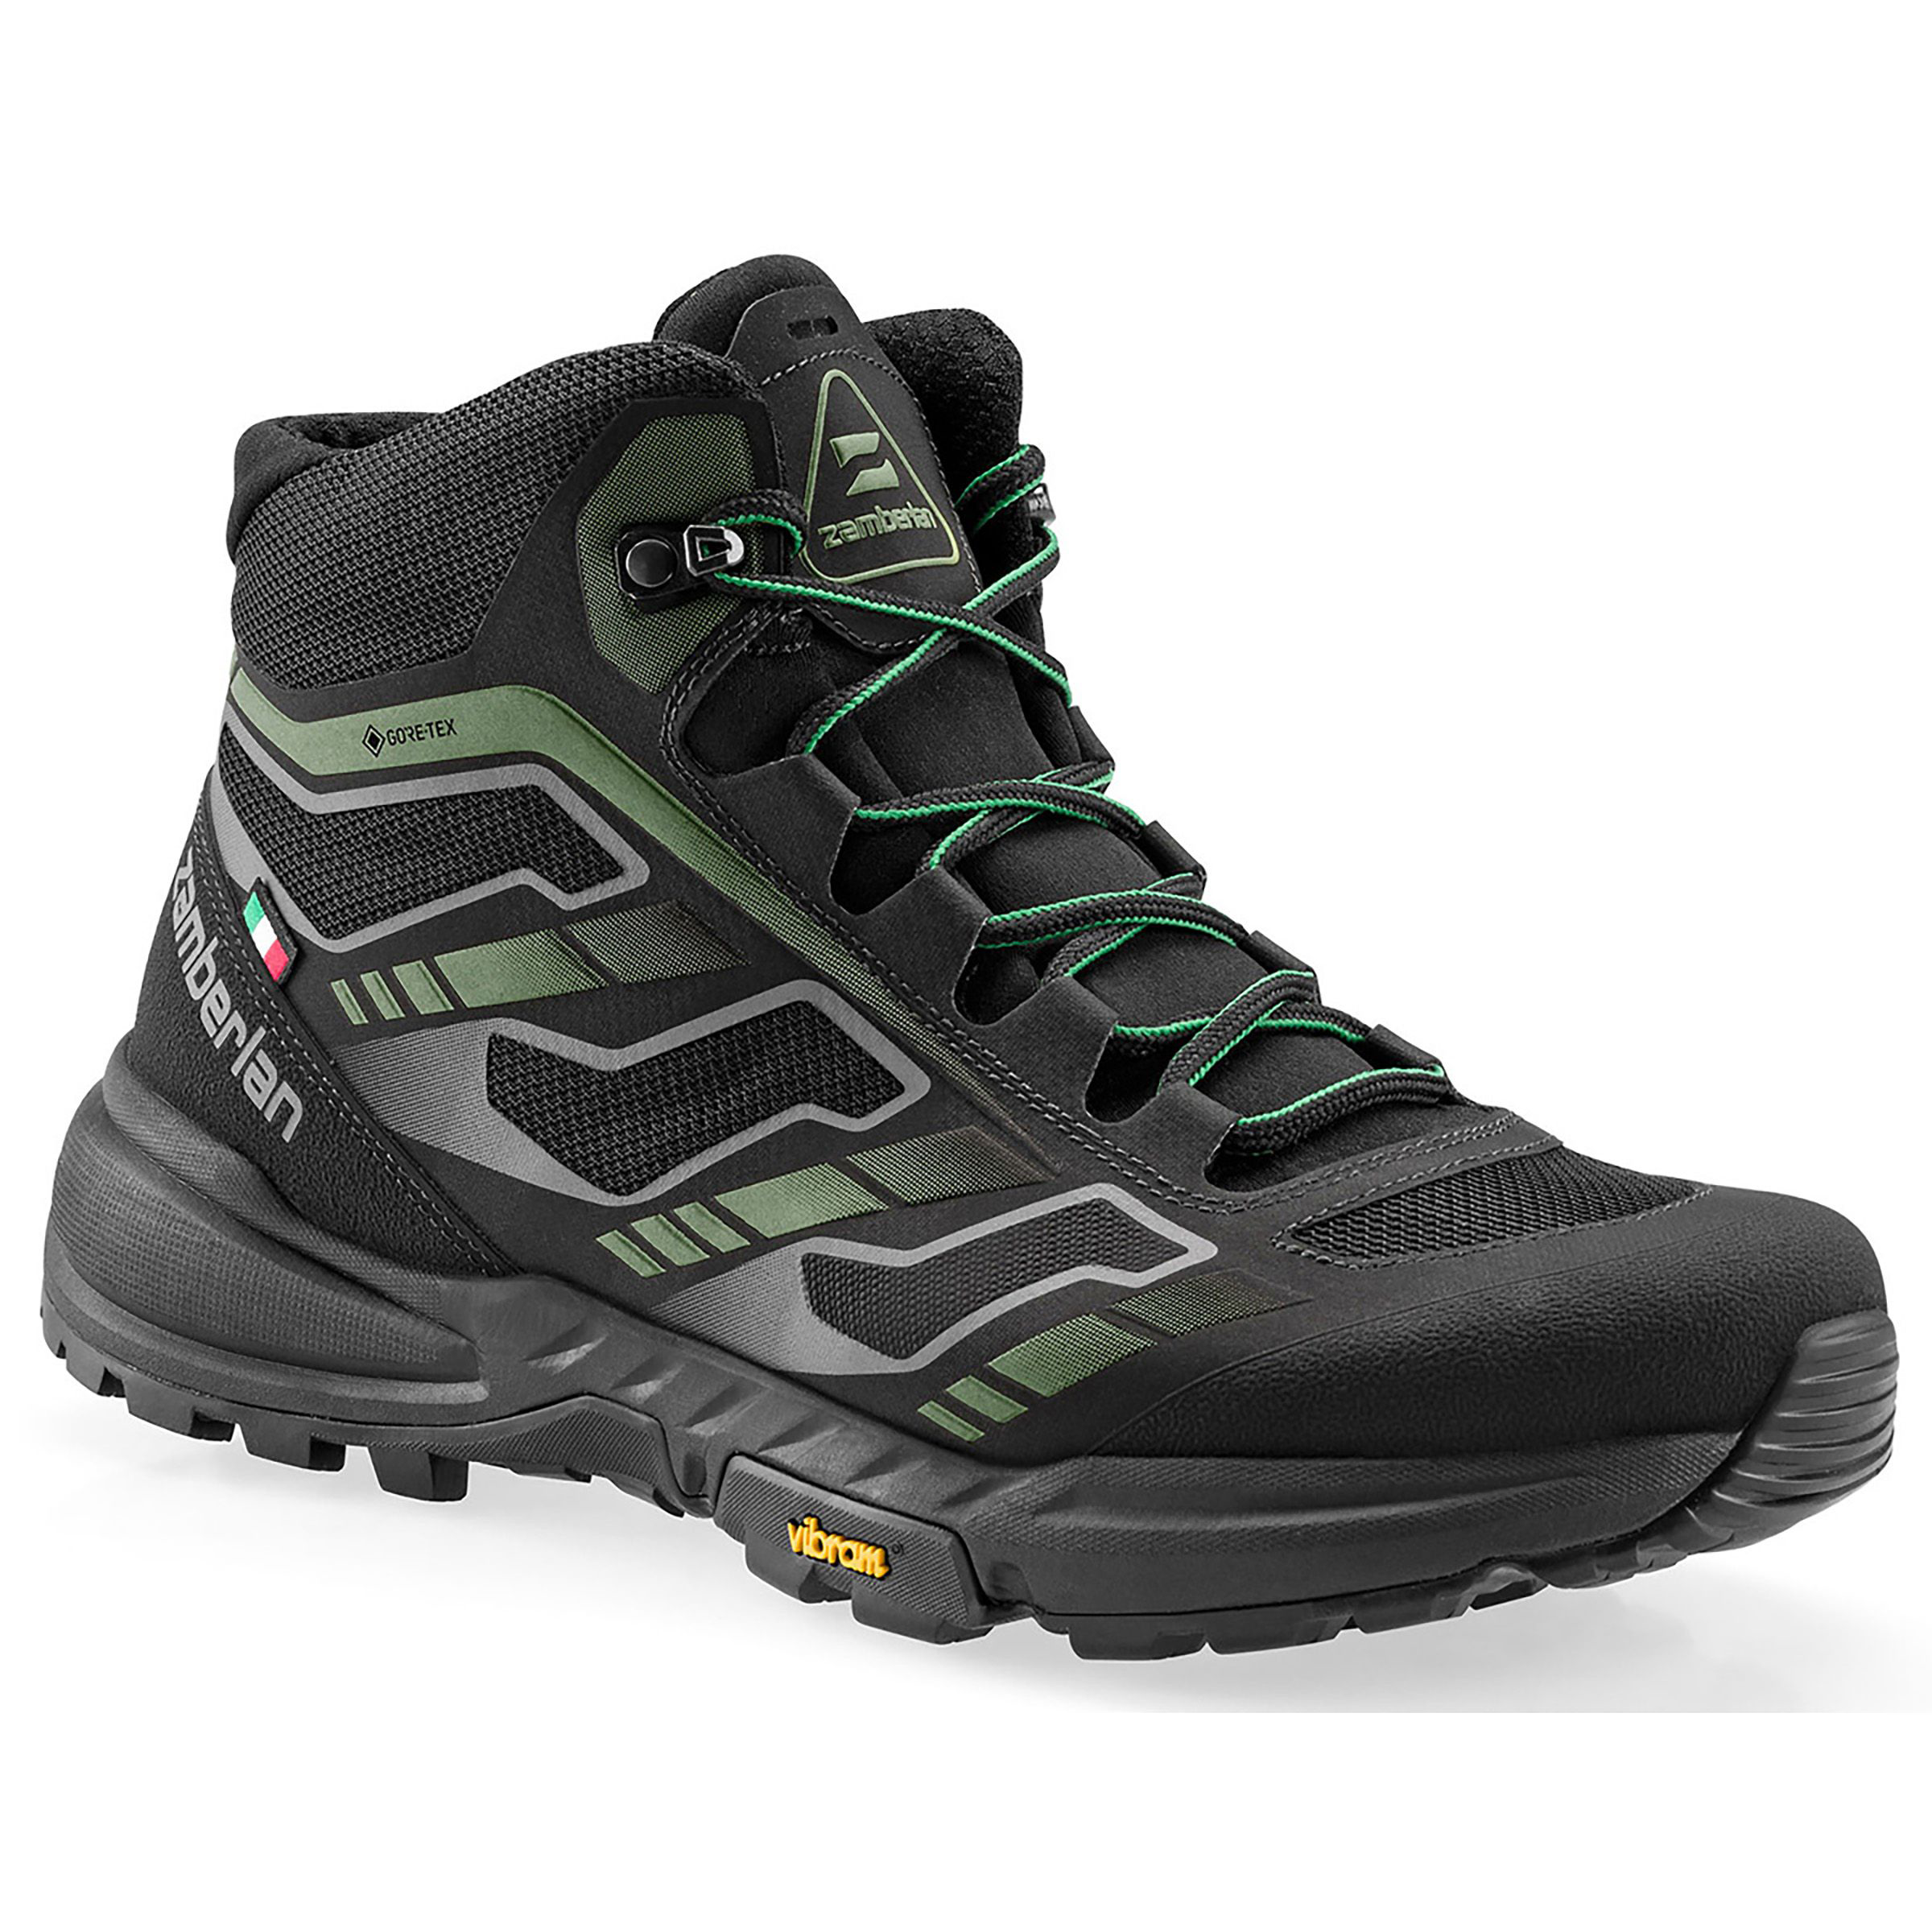 Zamberlan 219 Anabasis GTX Waterproof Mid Hiking Boots for Men - Dark Green - 10M